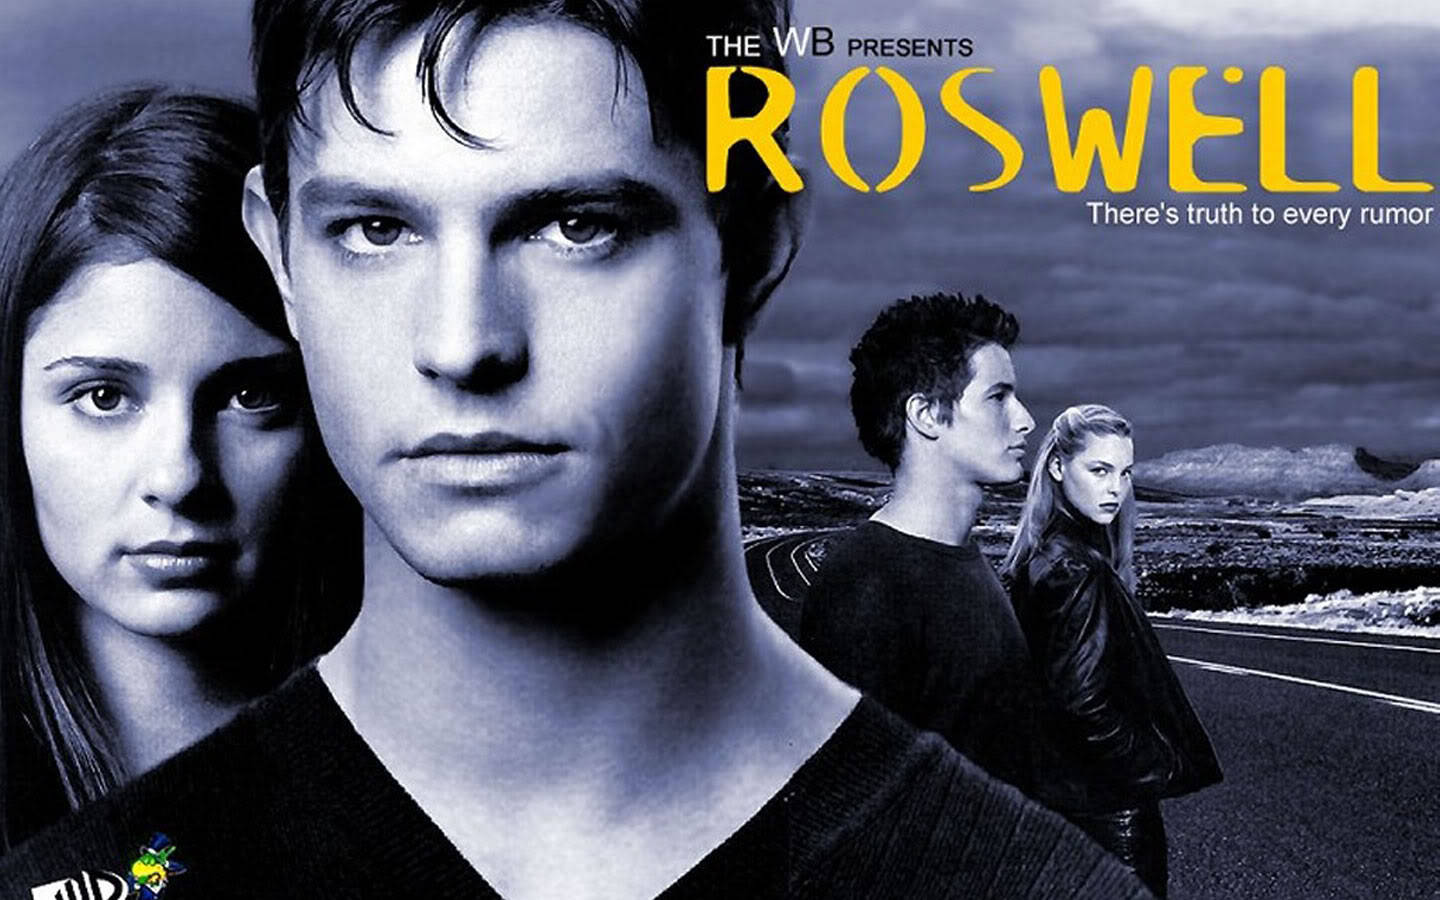 Roswell Season 1 (1999)